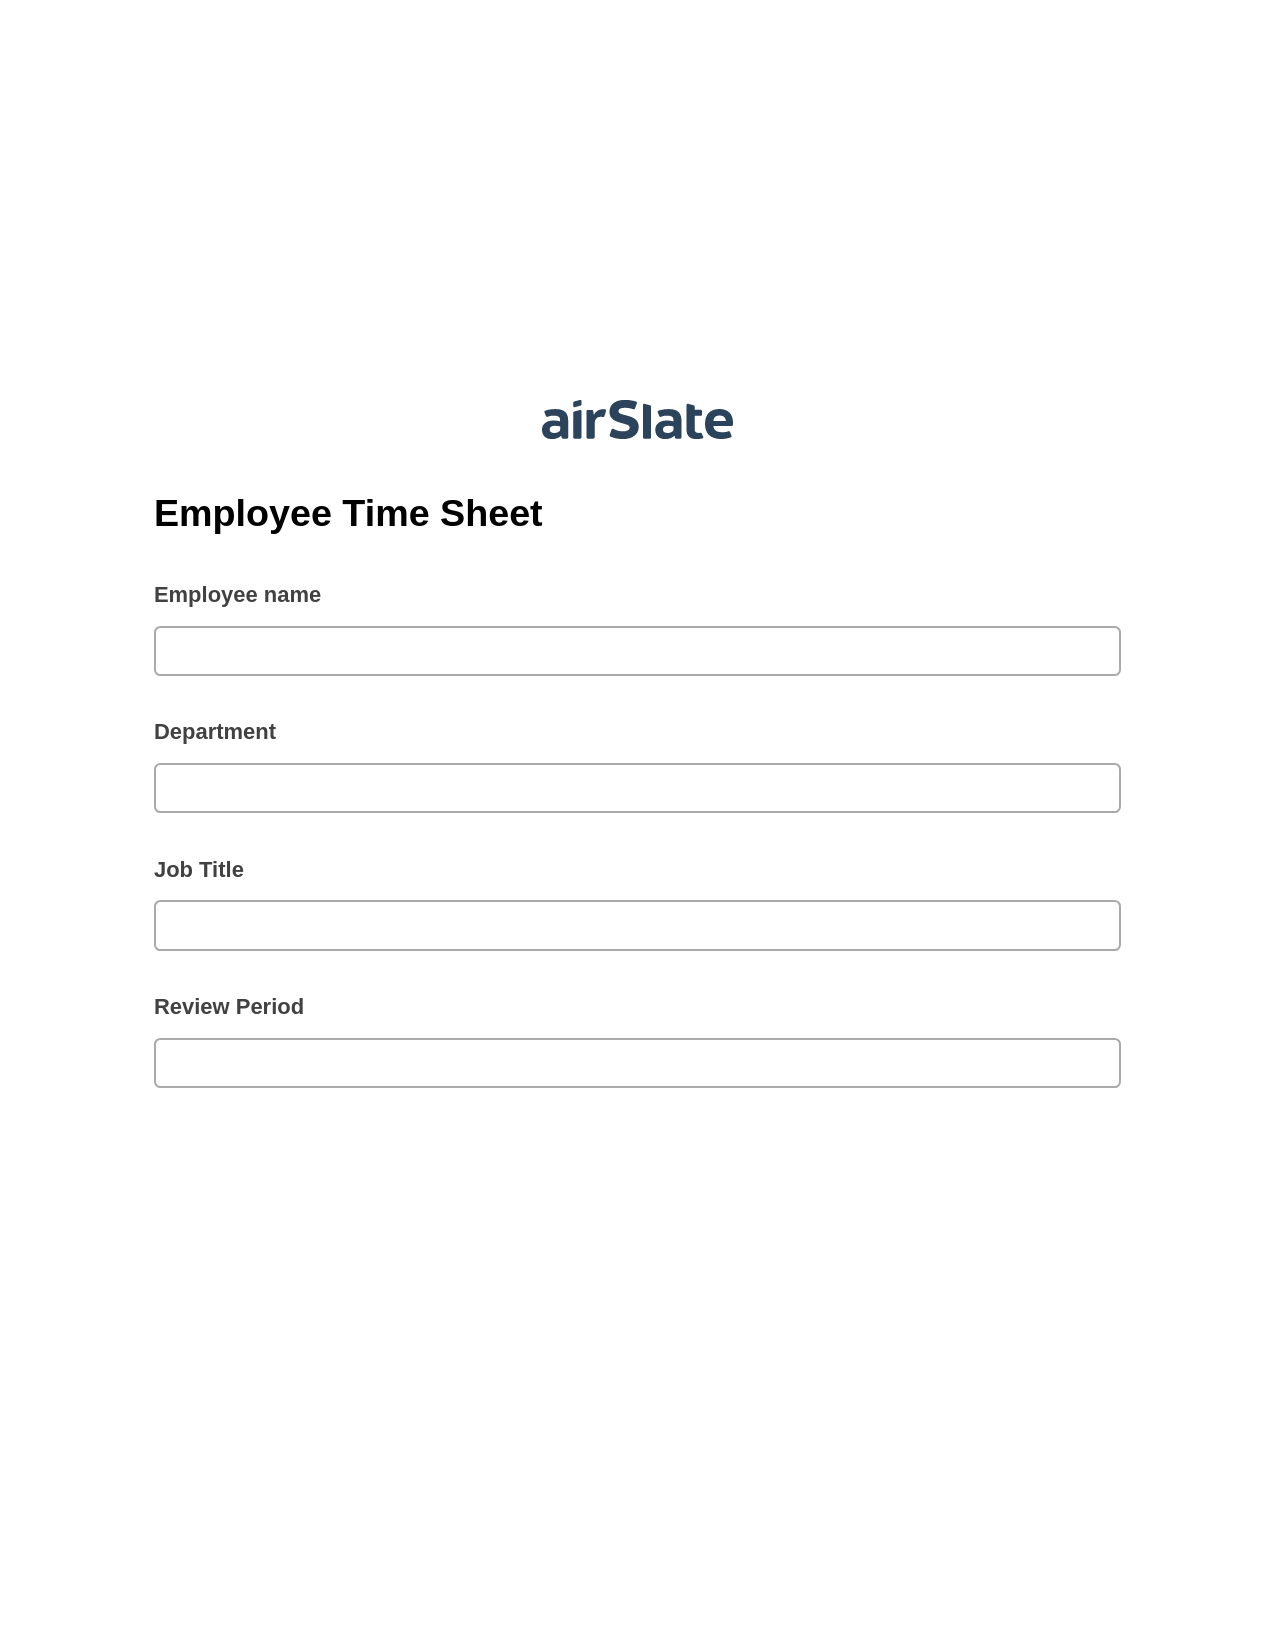 Multirole Employee Time Sheet Pre-fill from Smartsheet Bot, Create slate addon, Export to NetSuite Bot